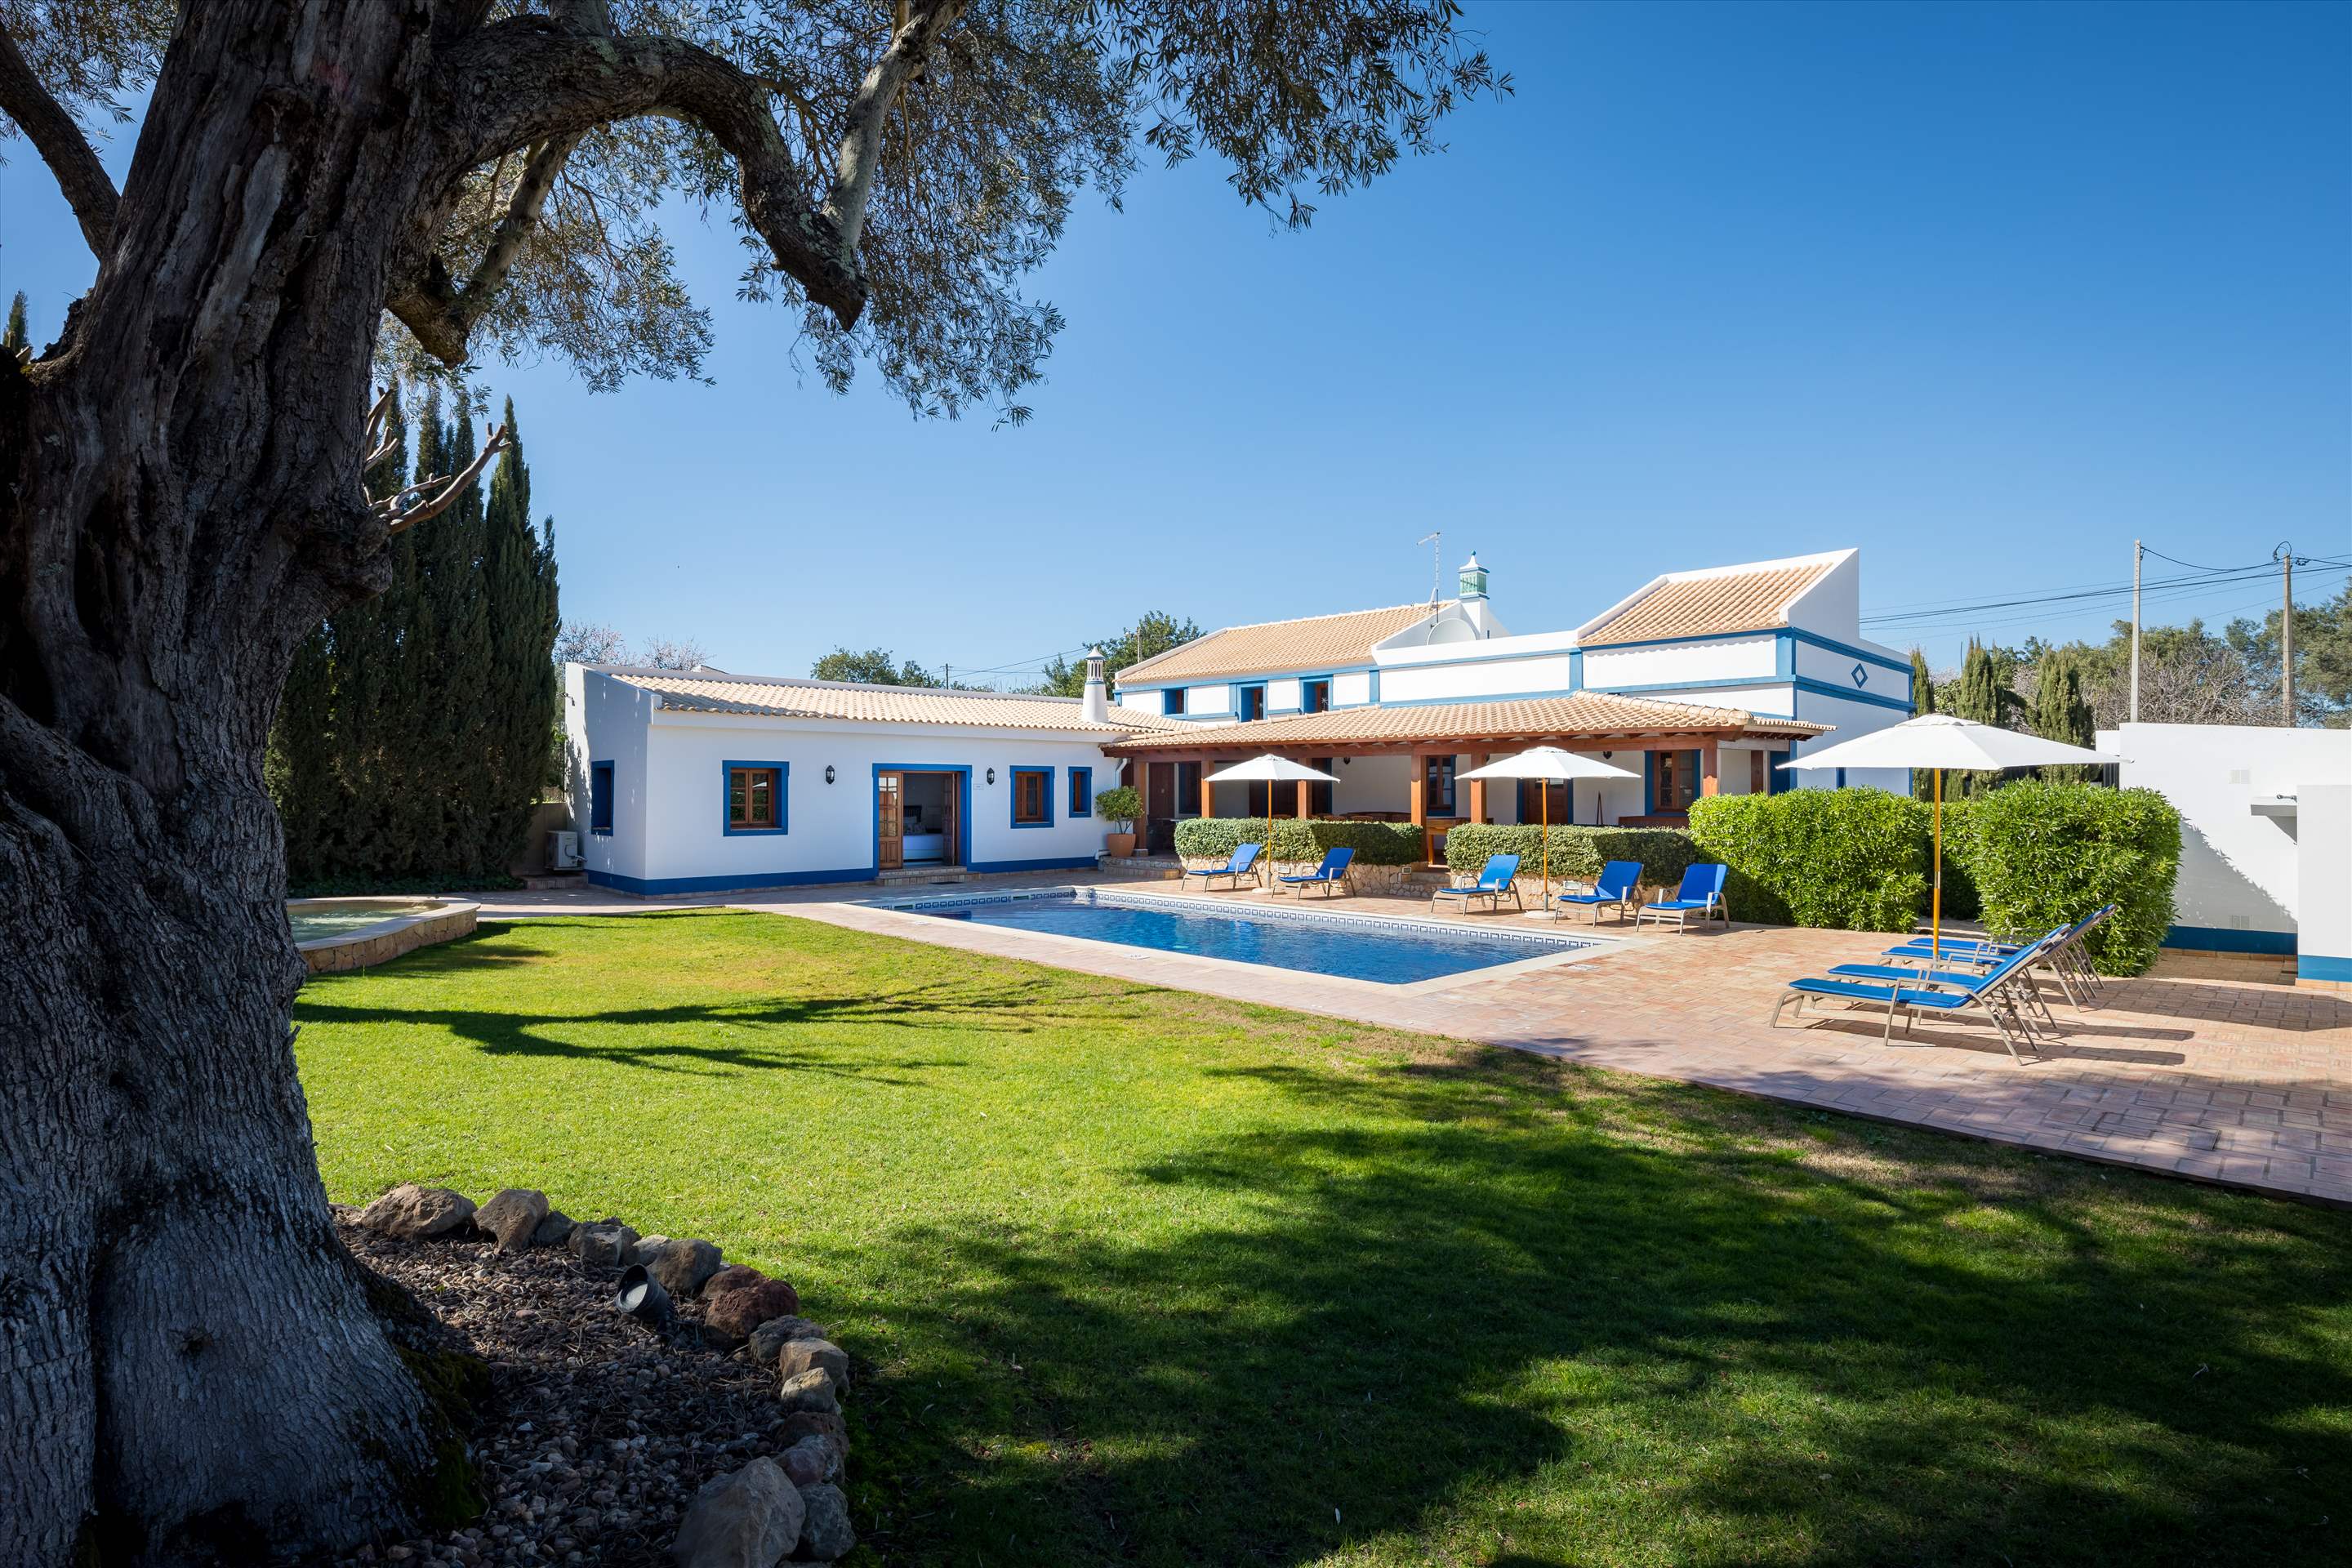 Casa do Ingles, up to 6 persons, 3 bedroom villa in Vilamoura Area, Algarve